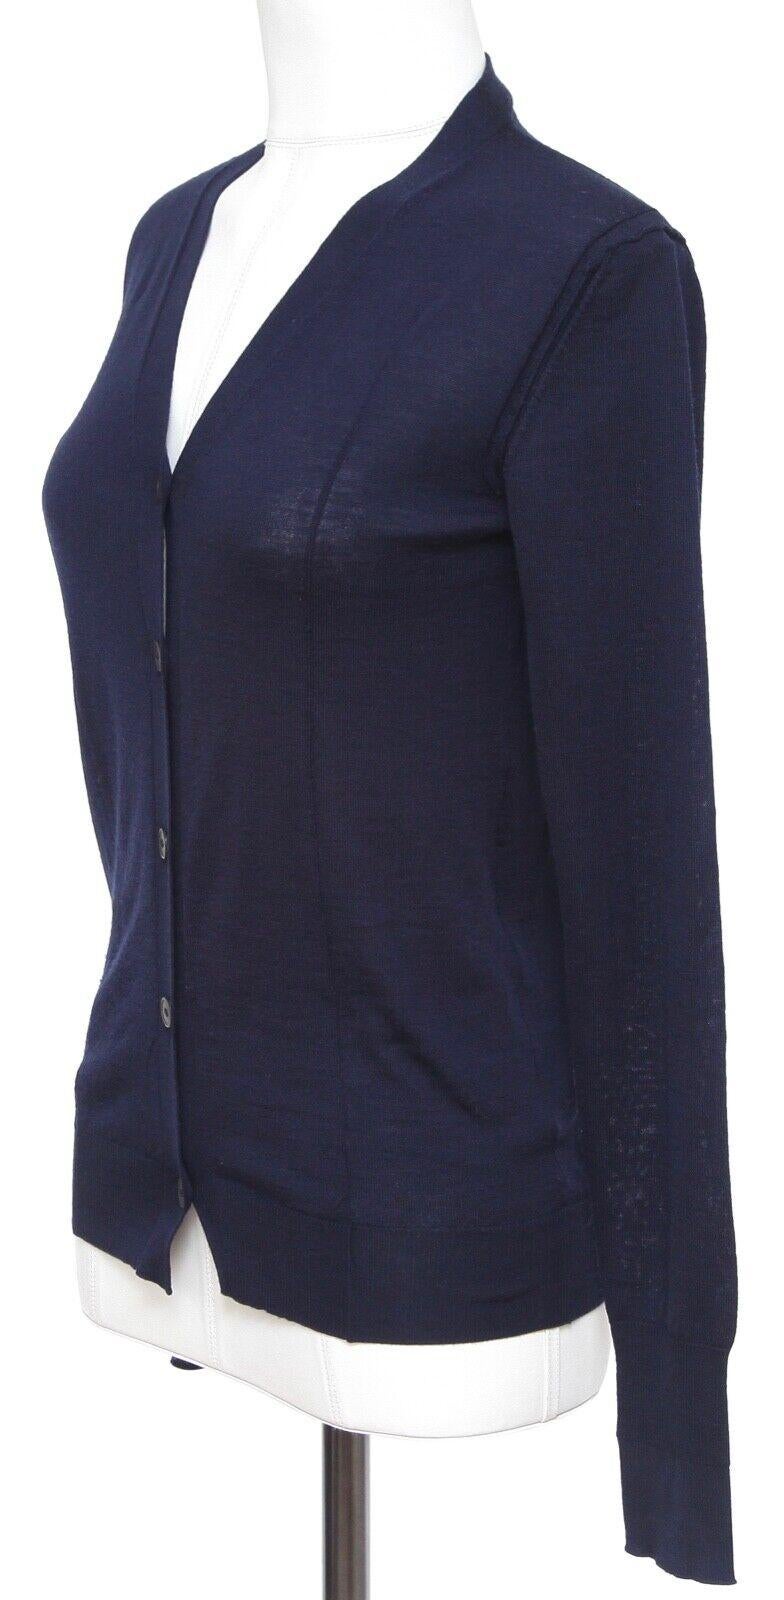 Black MIU MIU Cardigan Sweater Knit Top Wool Navy Blue V-Neck Long Sleeve Sz 36